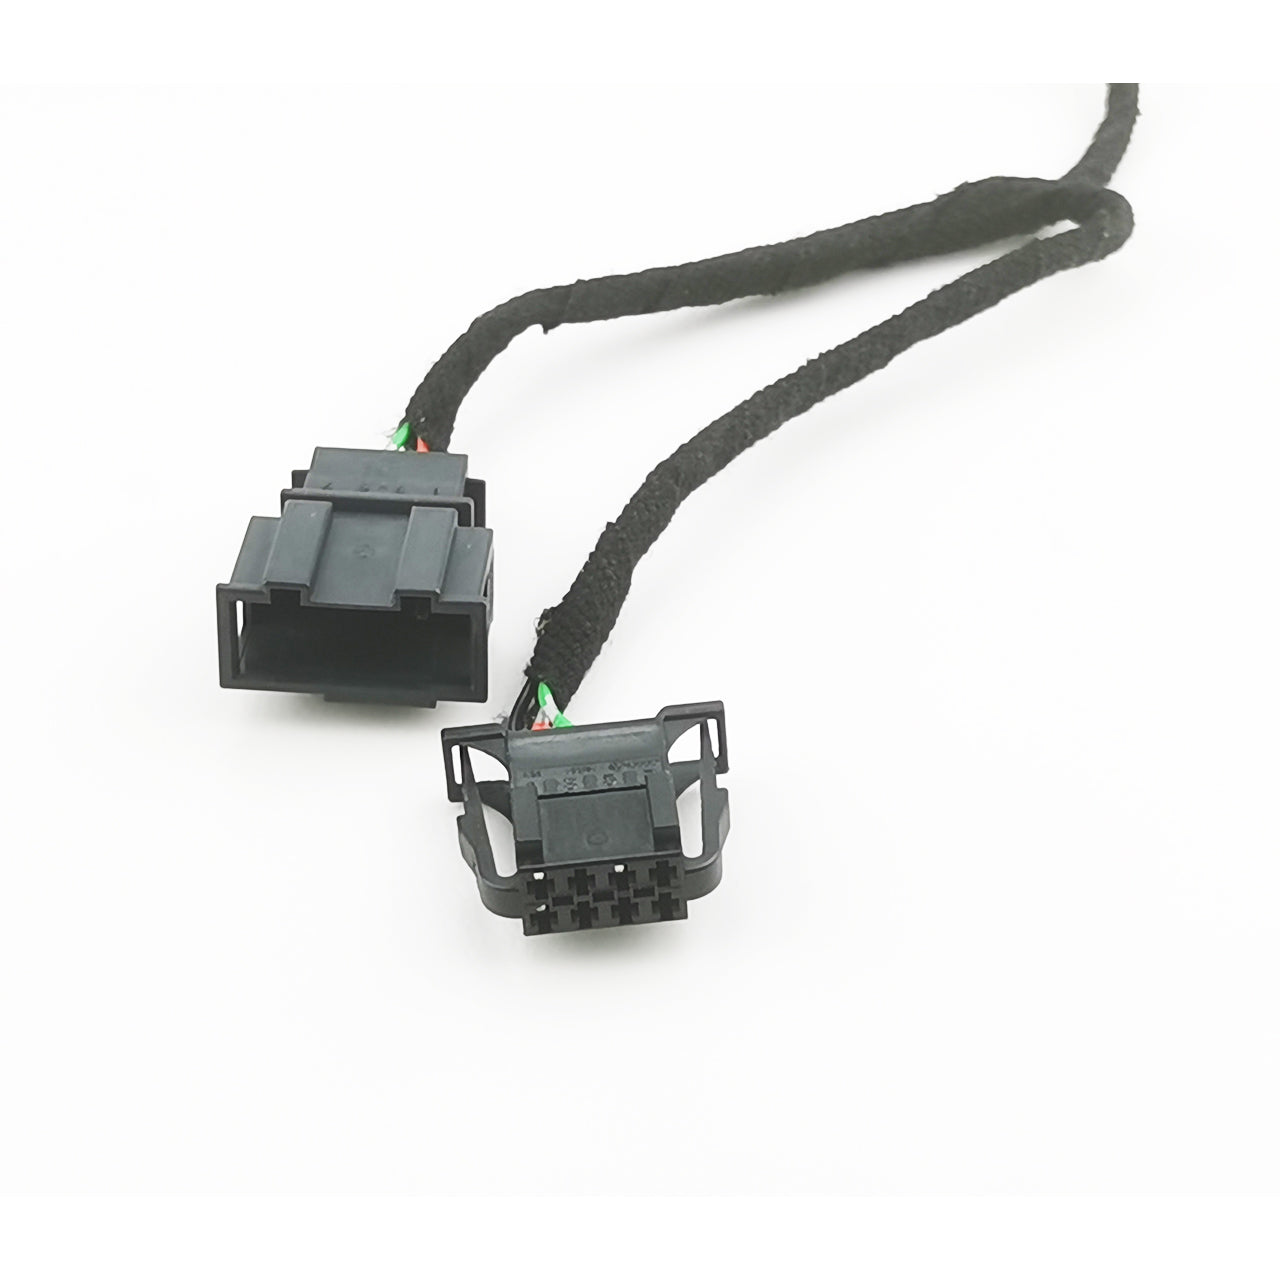 Plug&amp;Play Power Cable for Audi MMI 2G 3G Mr12Volt P600 P700 P900 CD Changer Navigation System Amplifier